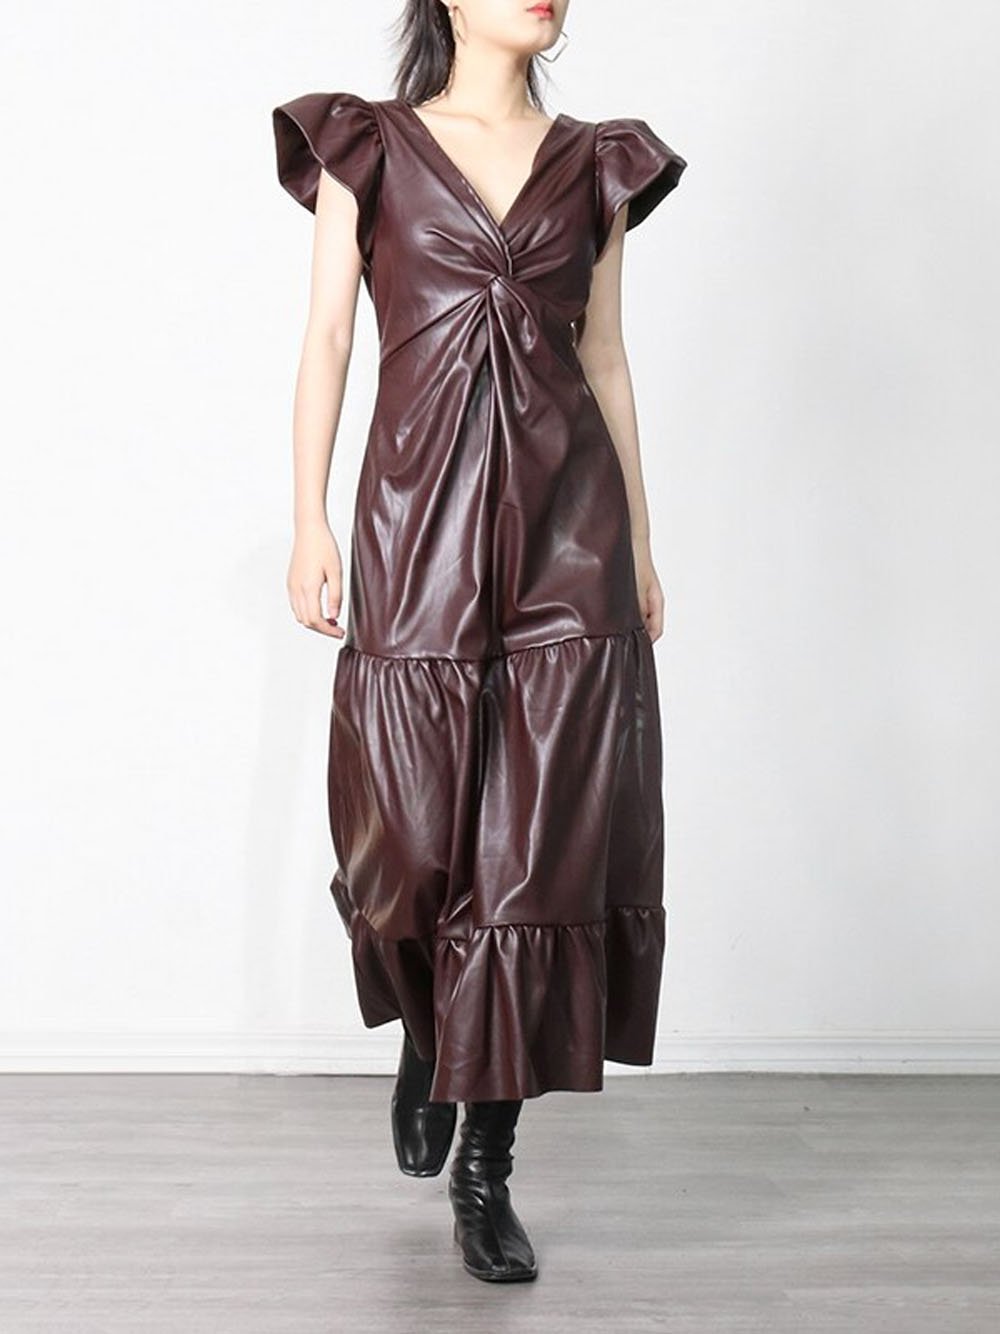 DOXA Leather Dress